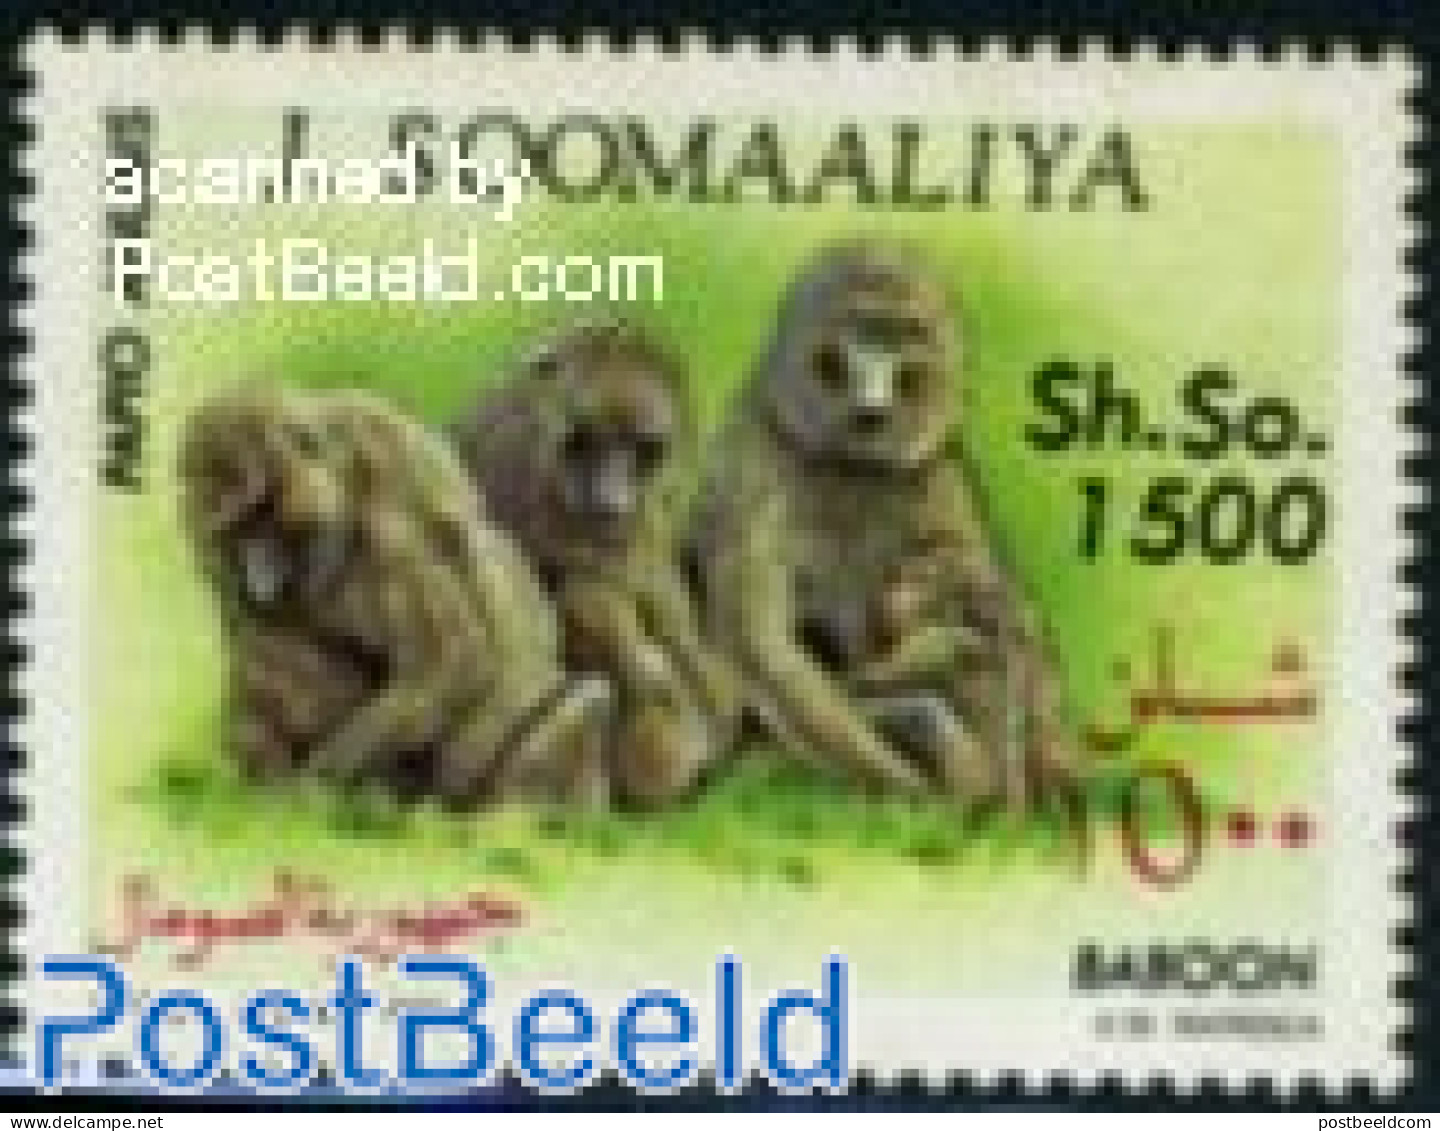 Somalia 1992 1500Sh., Stamp Out Of Set, Mint NH, Nature - Monkeys - Somalië (1960-...)